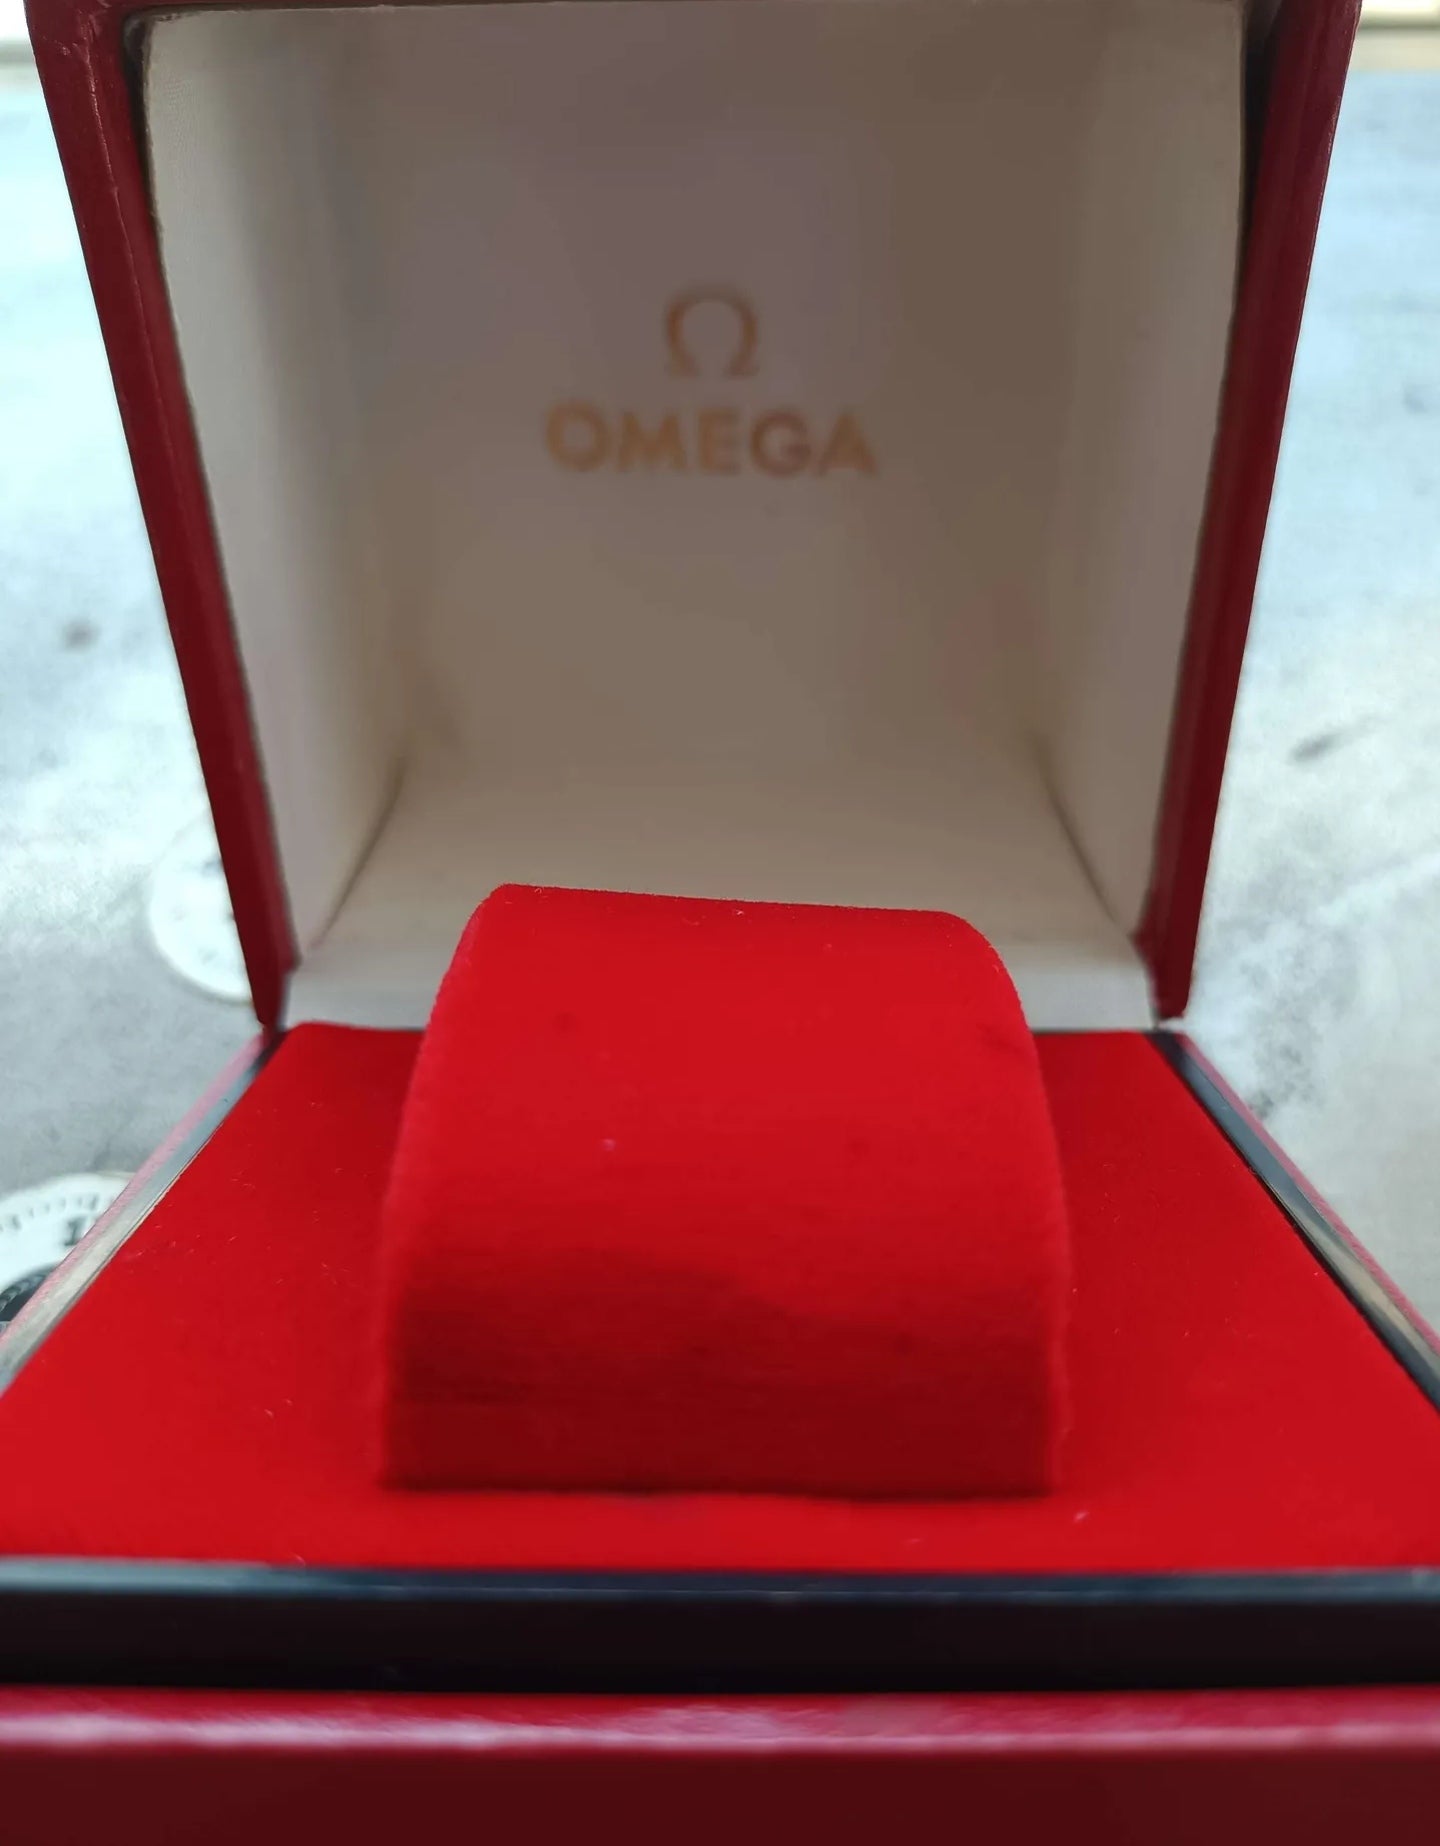 OMEGA CUBE BOX - VERY GOOD - MINT